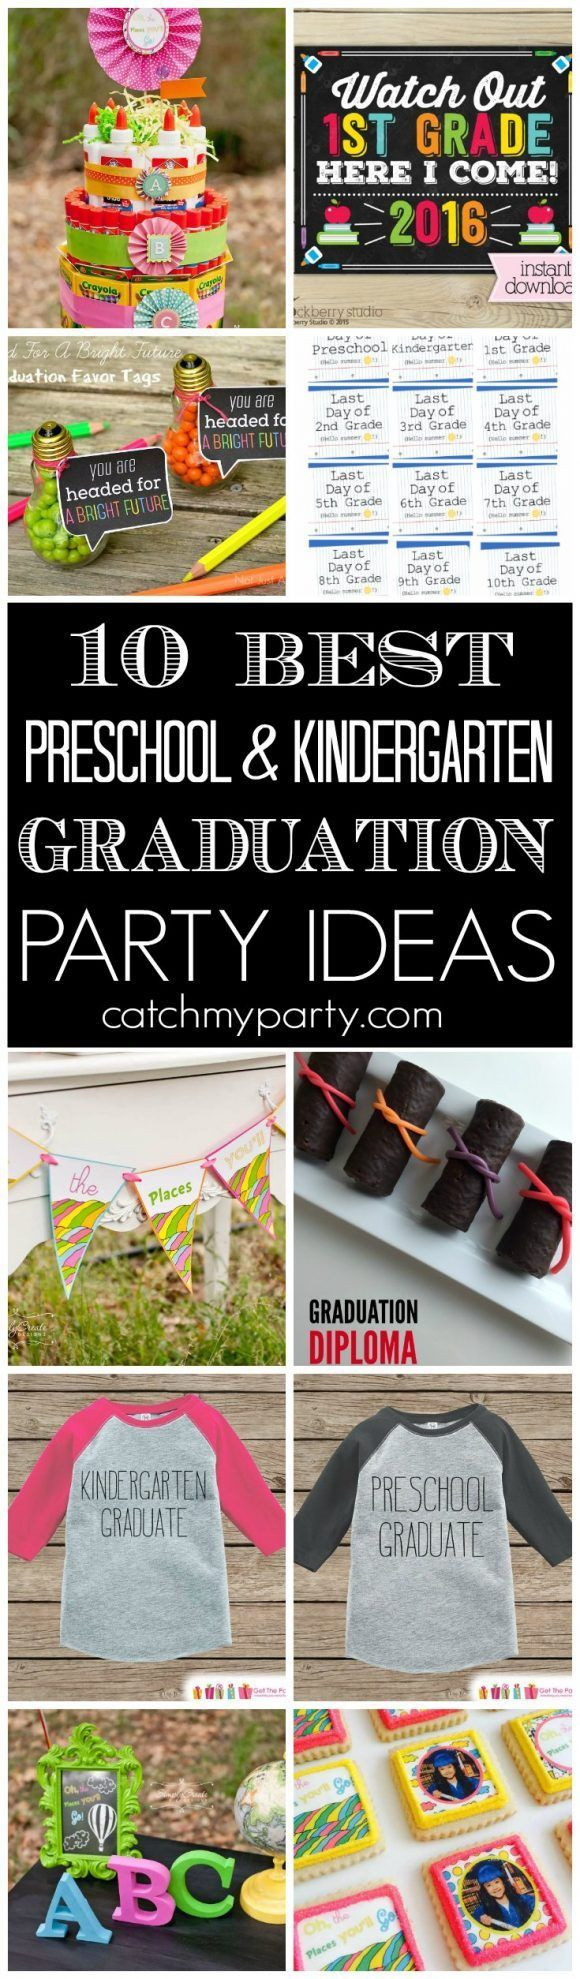 Kindergarden Graduation Party Ideas
 10 Best Preschool & Kindergarten Graduation Party Ideas